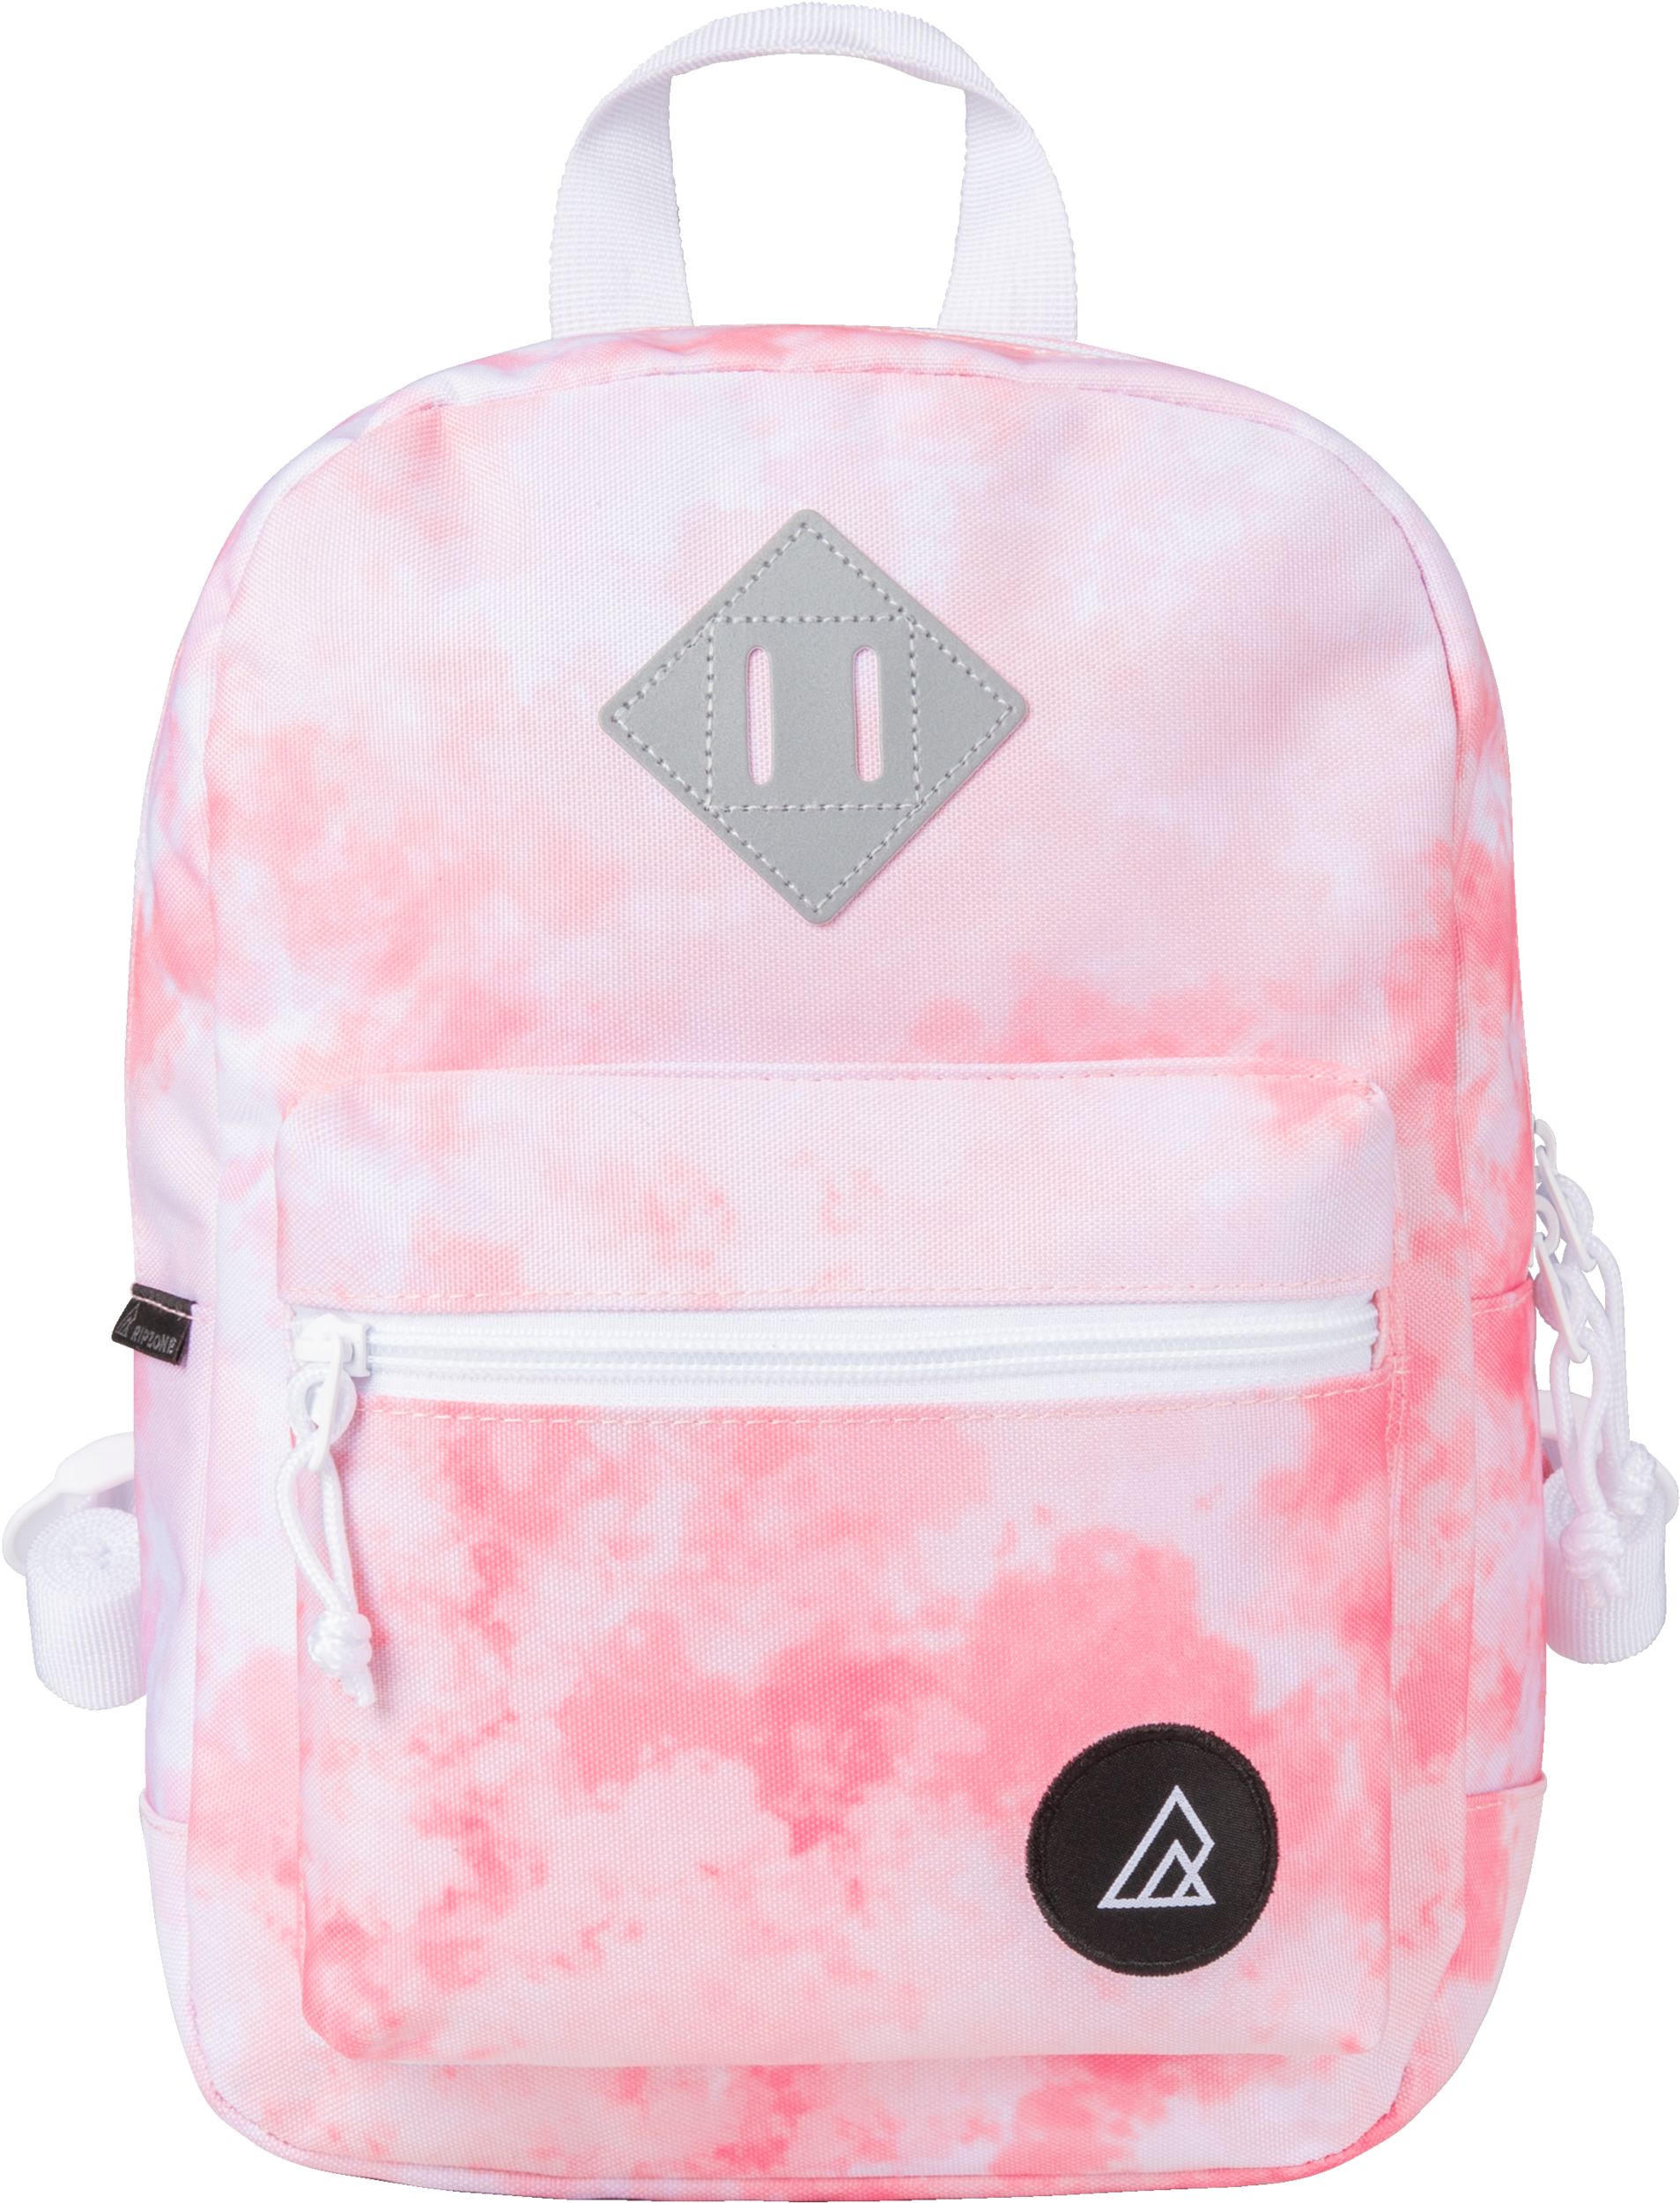 Ripzone Girls' Nori 5L Backpack